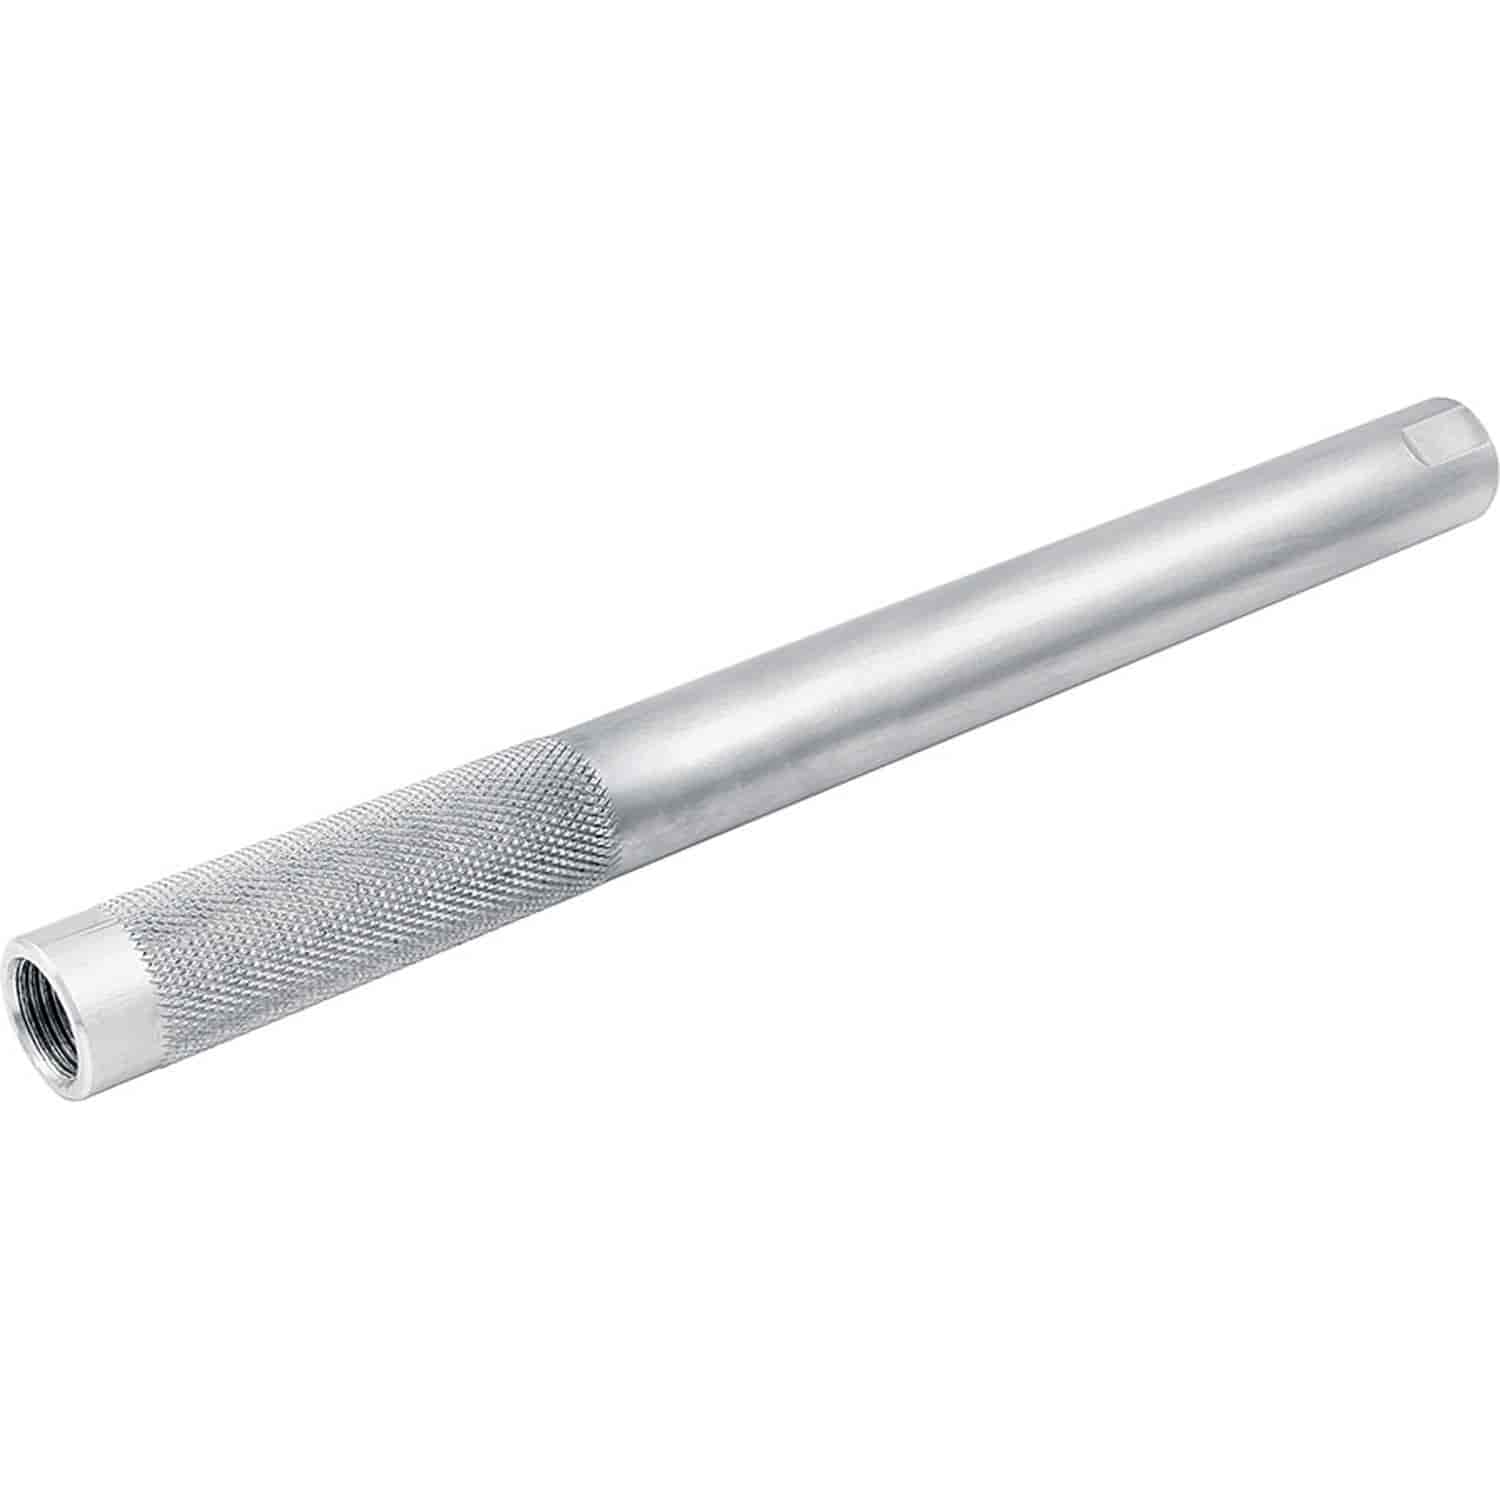 Swedged Aluminum Tie Rod Tube Length: 20